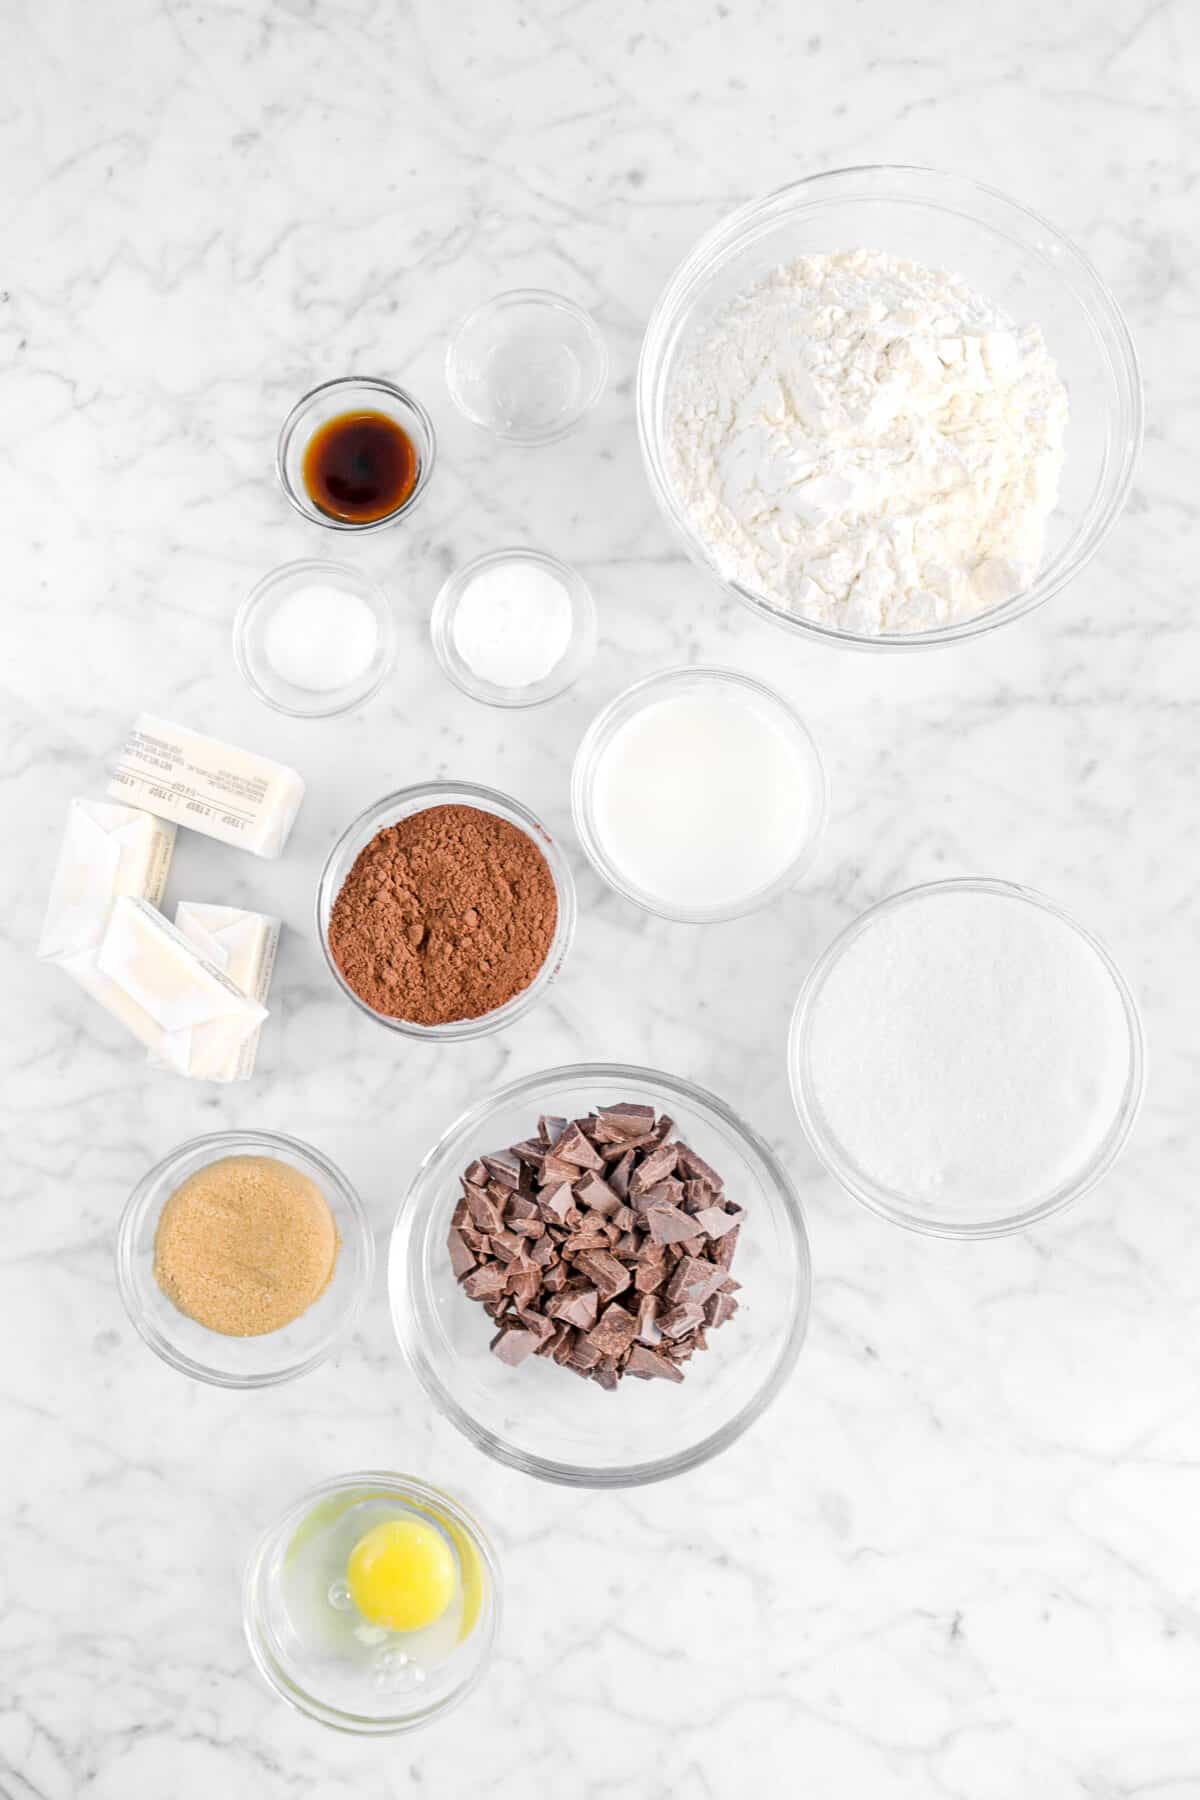 flour, peppermint oil, vanilla, salt, baking soda, milk, sugar, cocoa powder, butter, chocolate chunks, brown sugar, and egg in glass bowls